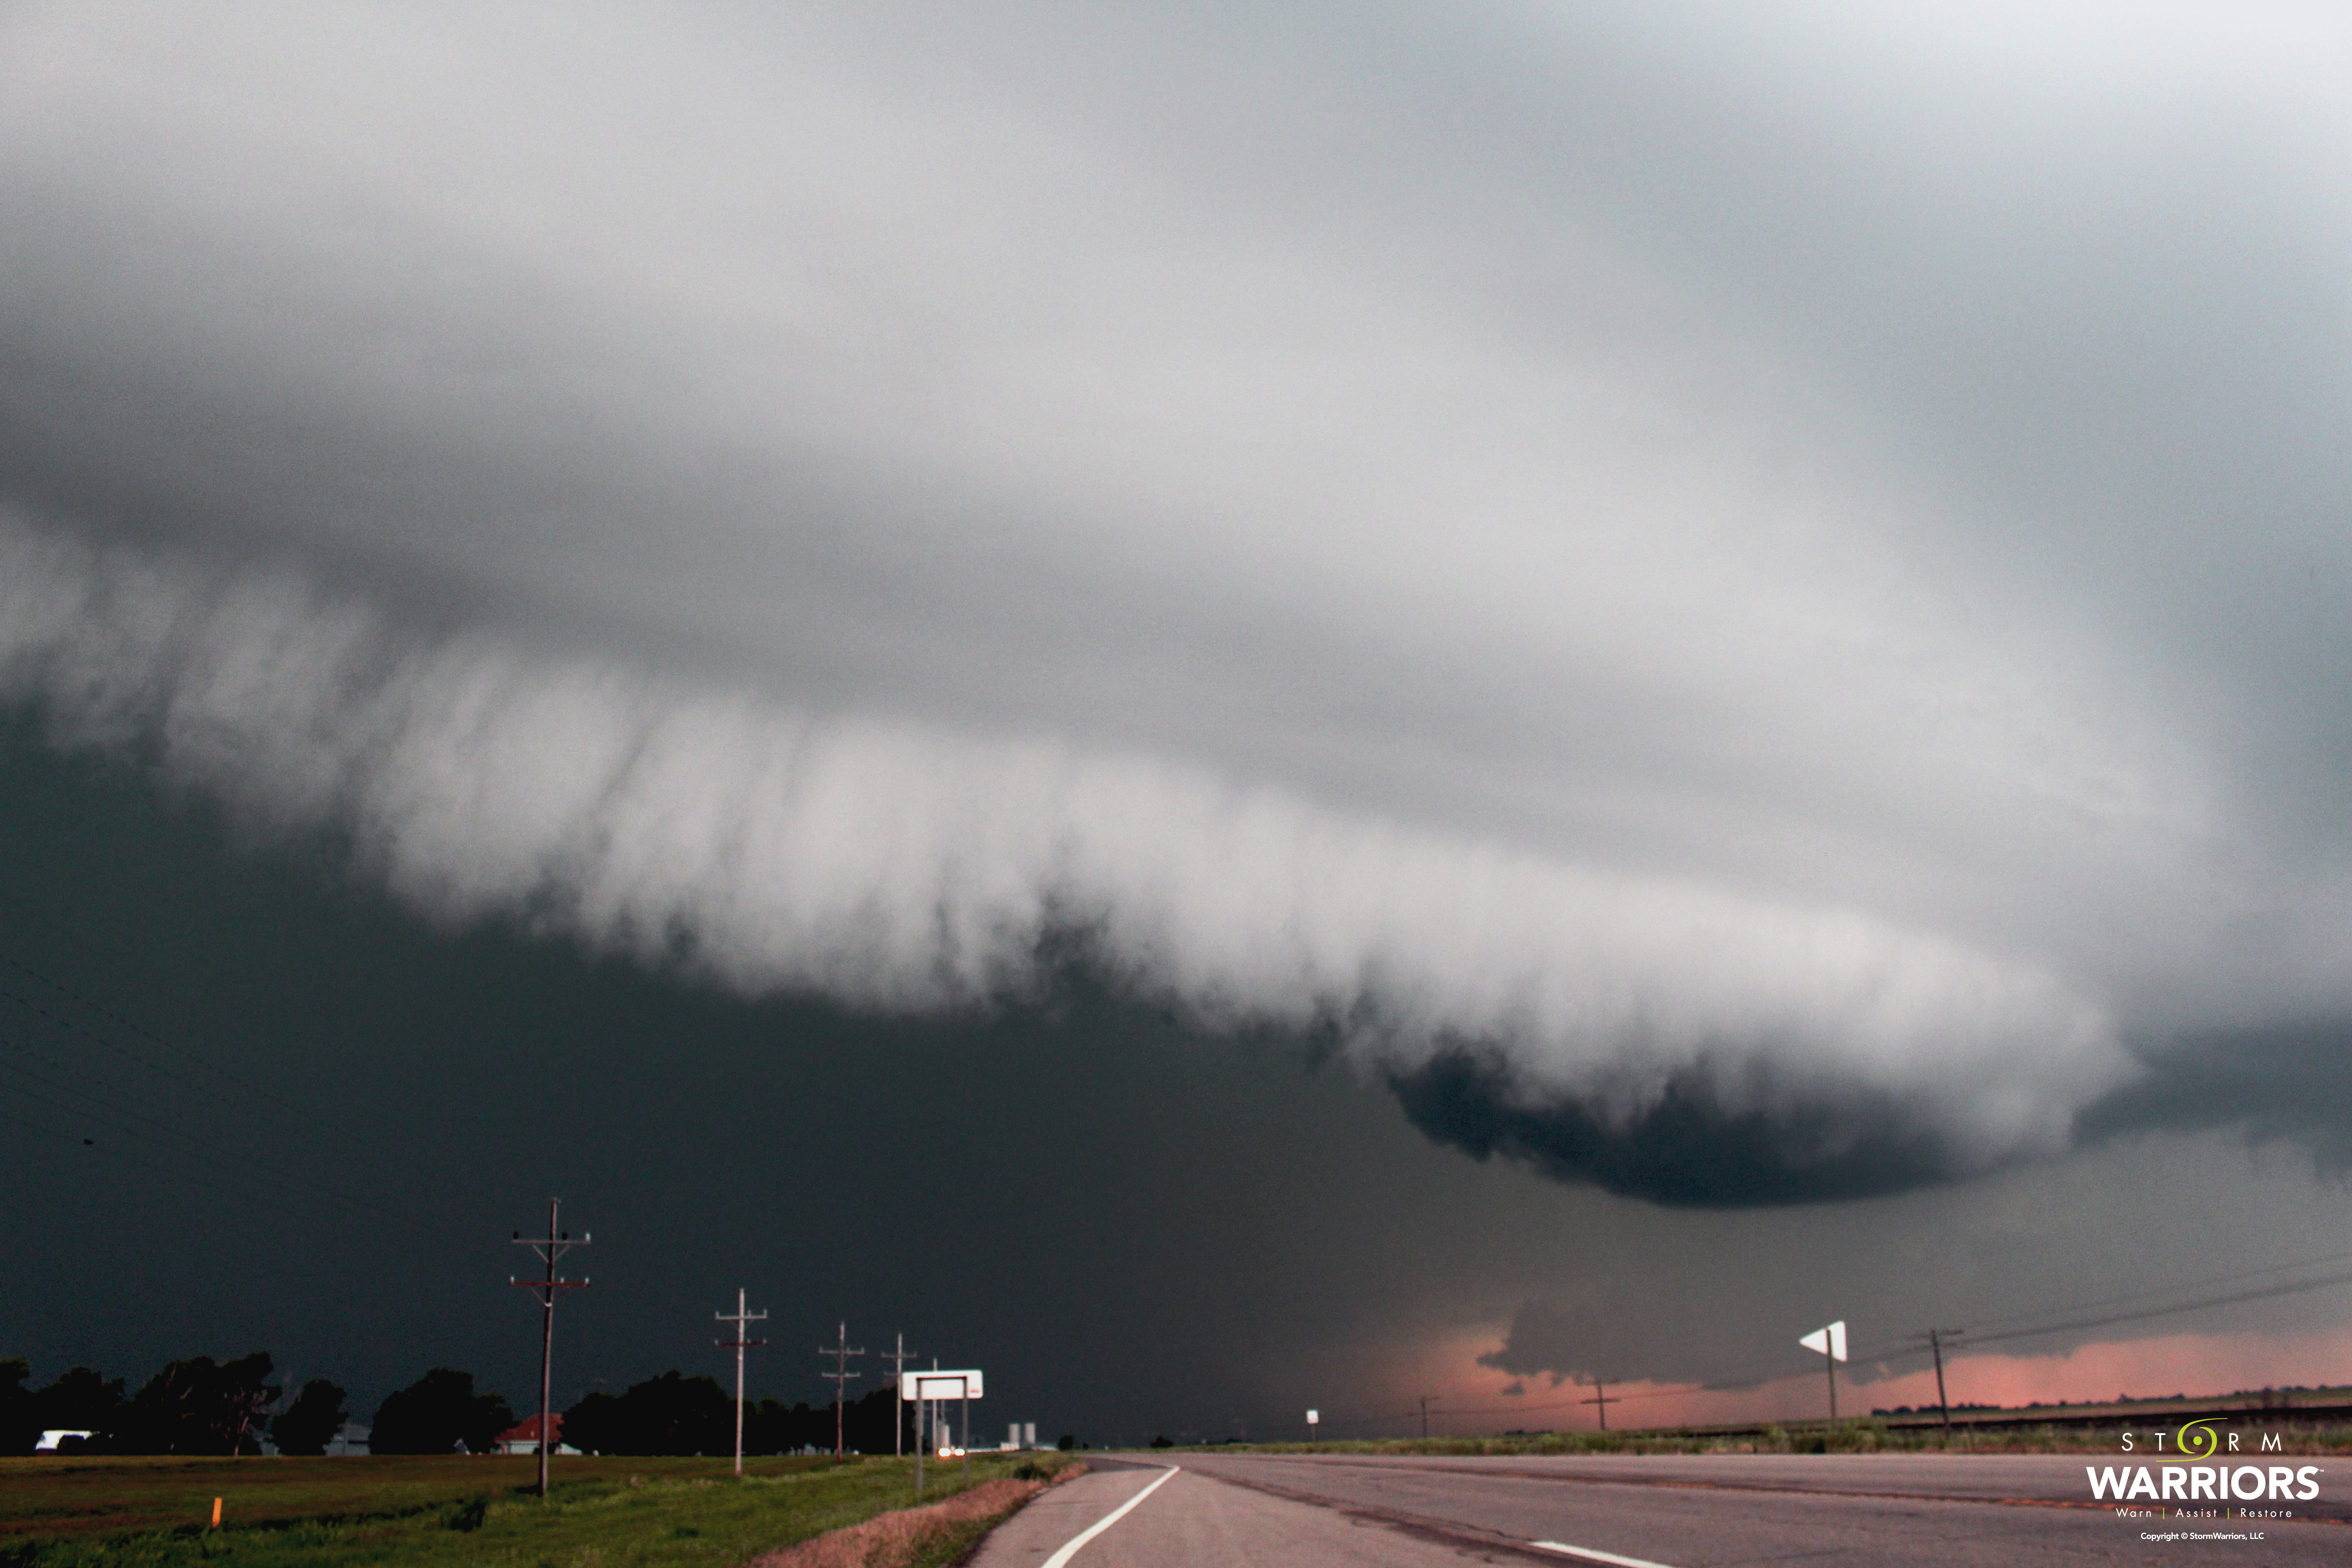 Shelf cloud near Dodge City, KS 5/26/16 photographed by Mike Prendergast